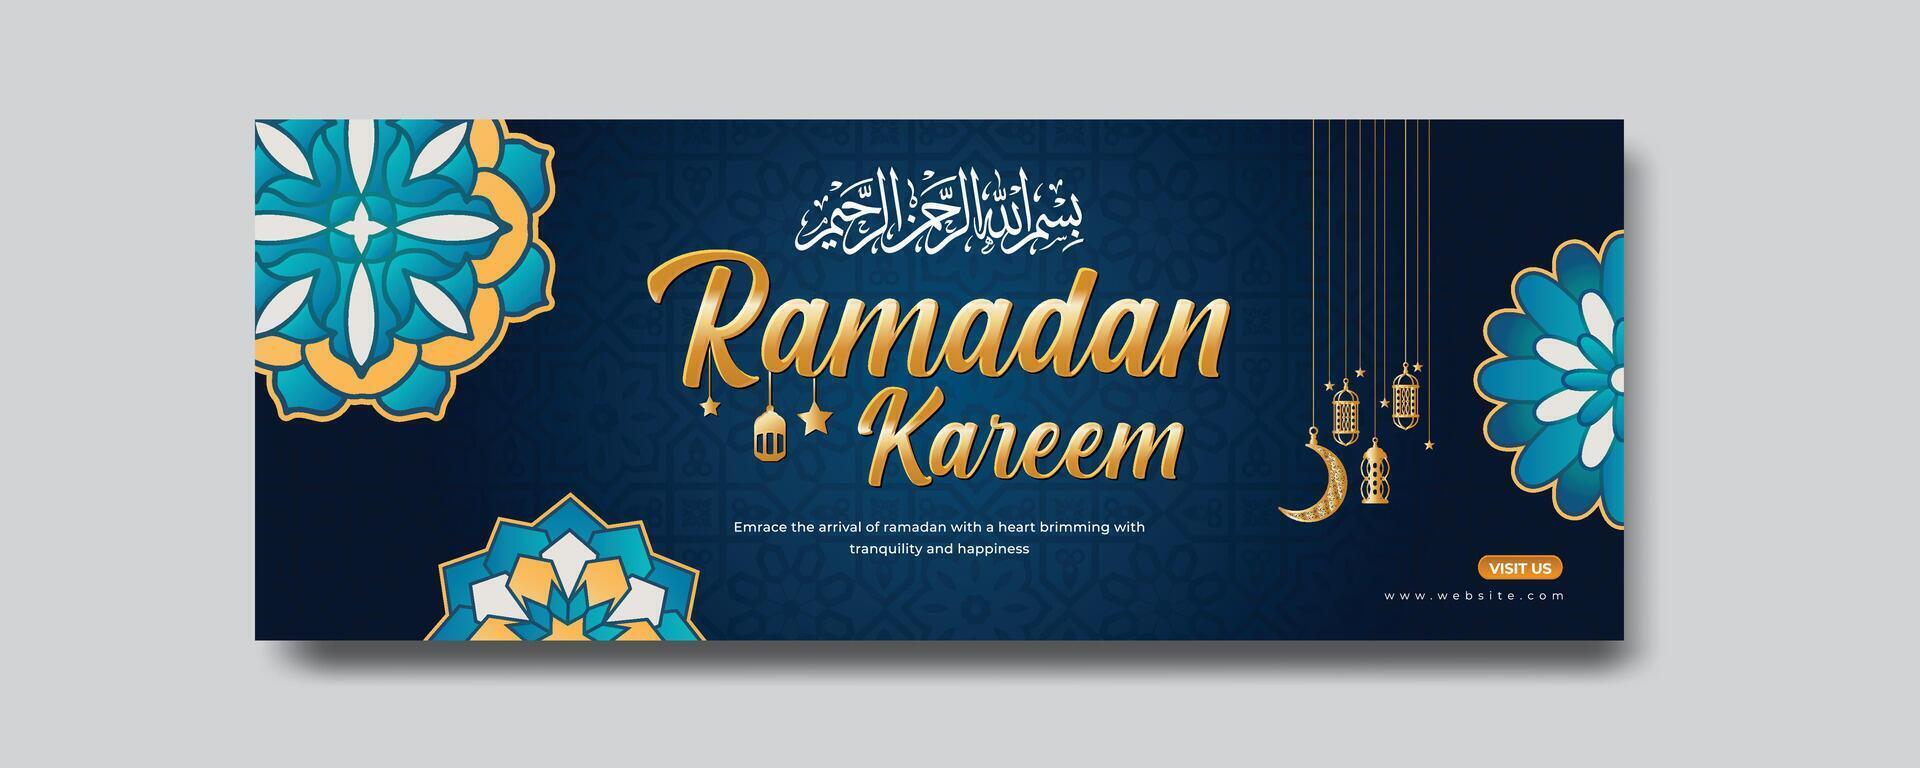 Ramadan karim groeten elegant sociaal media banier ontwerp sjabloon vector